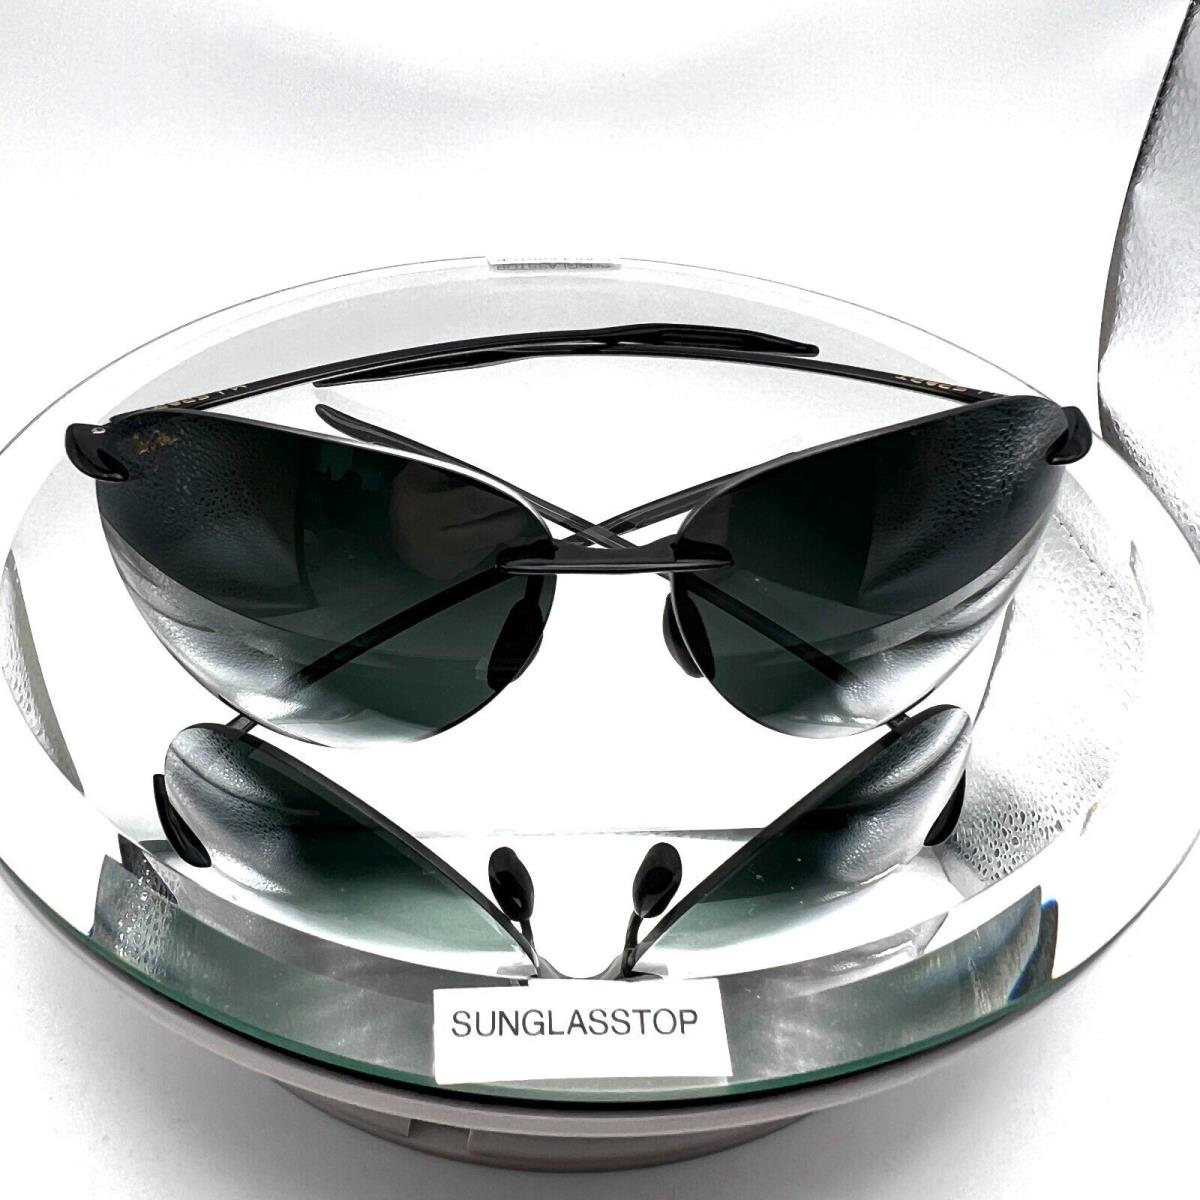 Maui Jim 421-02 Sunglasses Sugar Beach Gloss Black / Grey Polarized Lenses